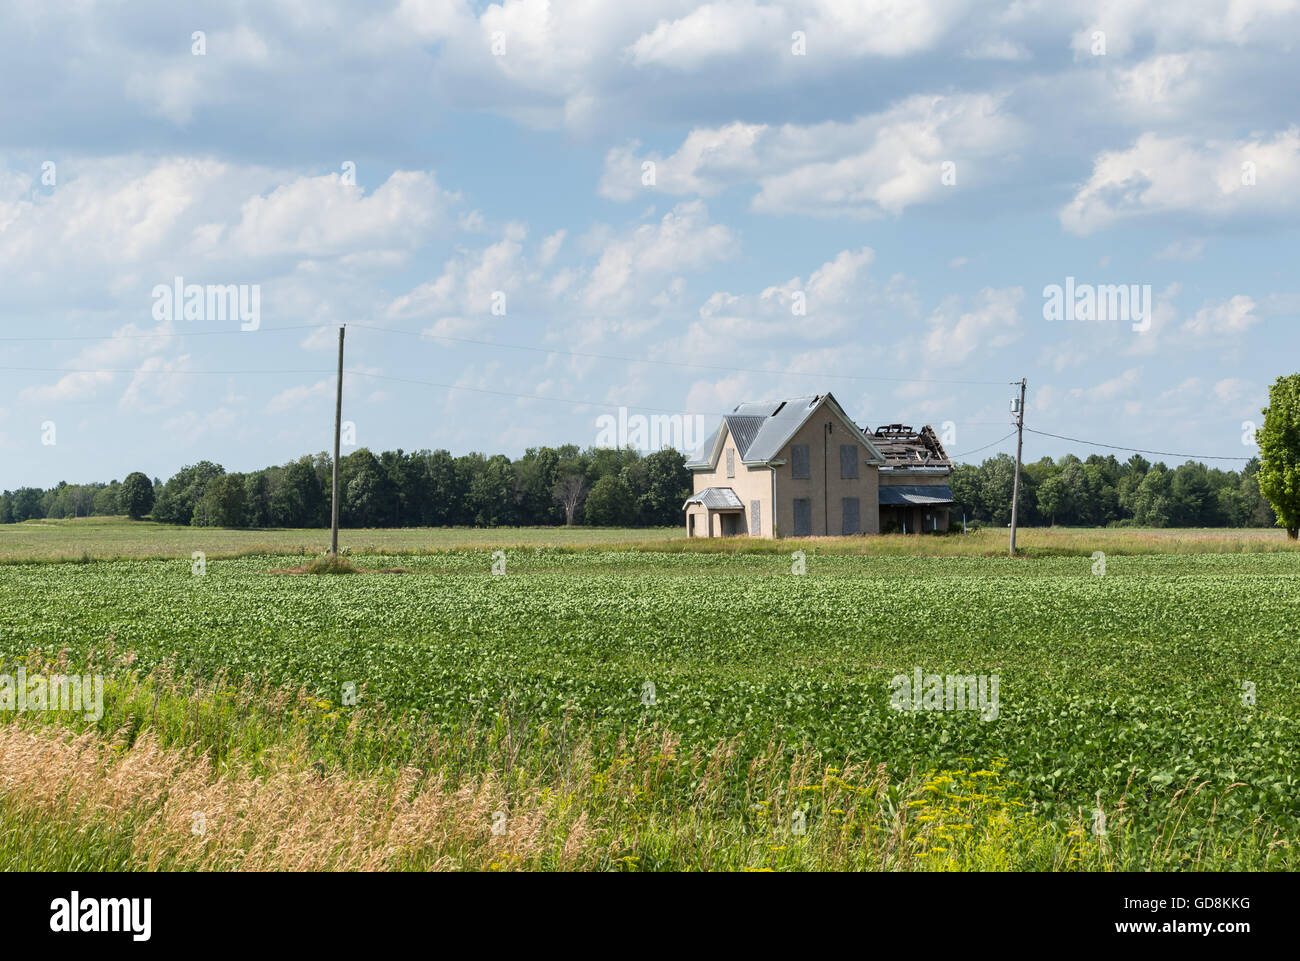 Farm house in a farmers field Stock Photo